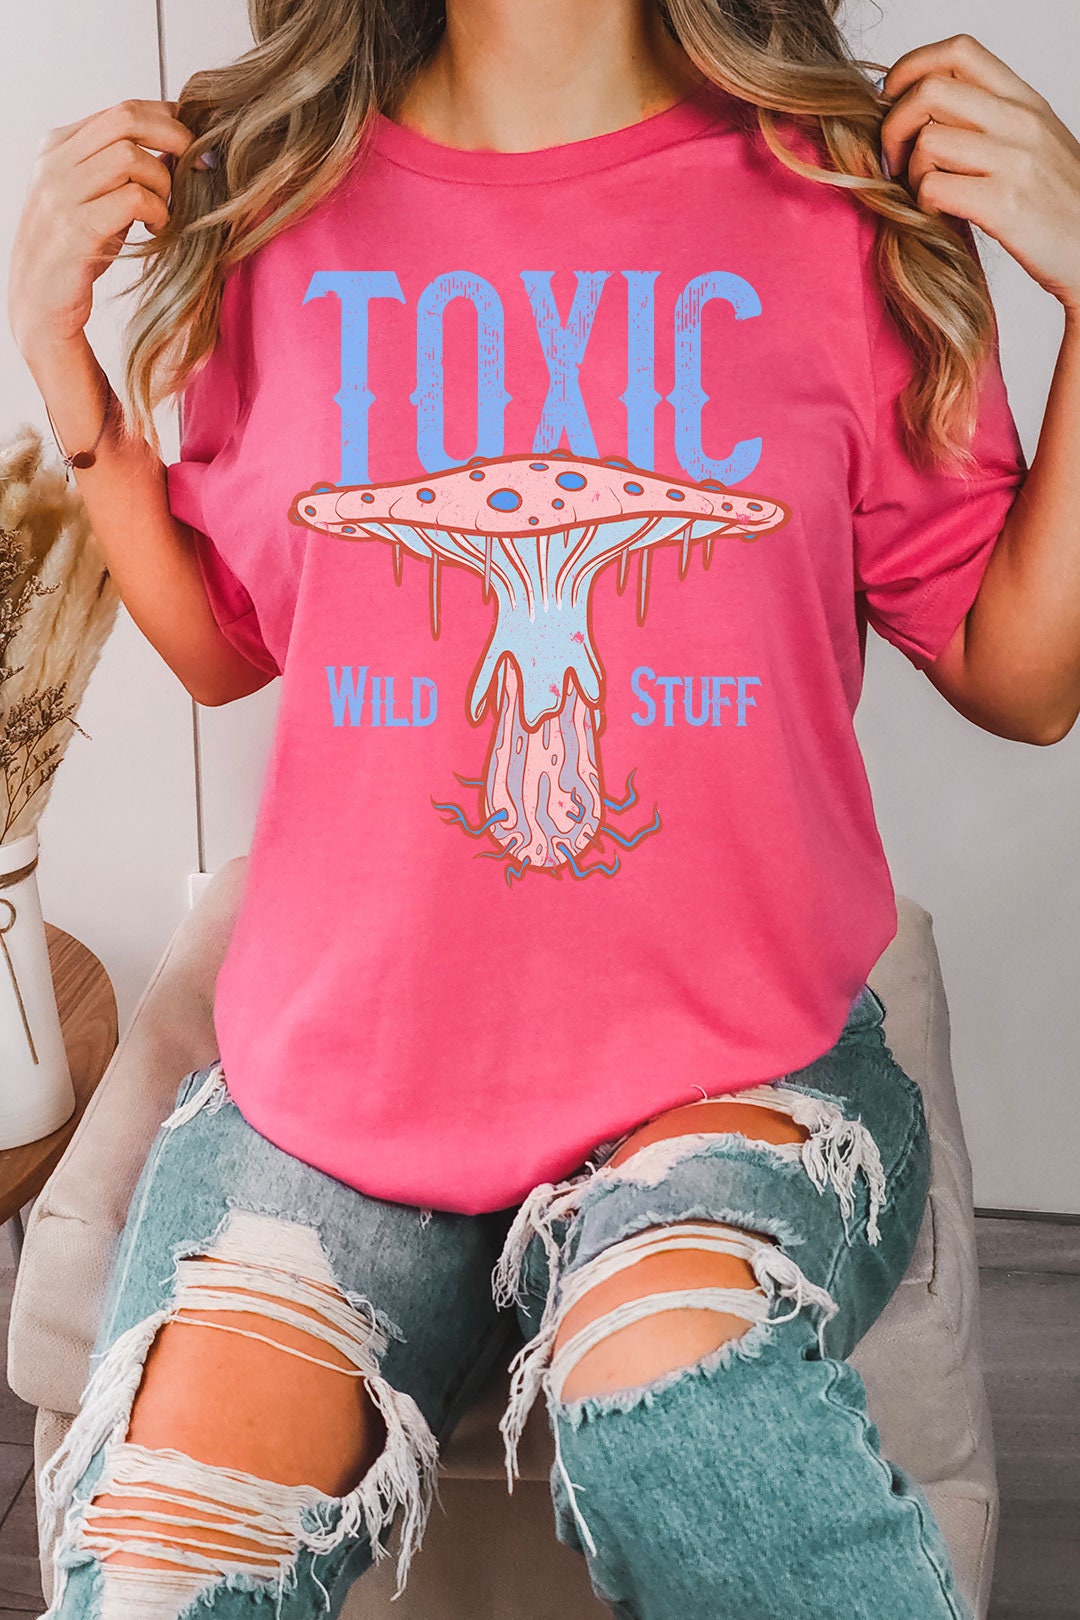 Toxic Blue Boho Mushroom Tee Comfort Colors Tee Gift Idea Retro 70’ Shirt Hippie Style Vintage Life Style Shirt Retro Boho Apparel Gift Idea